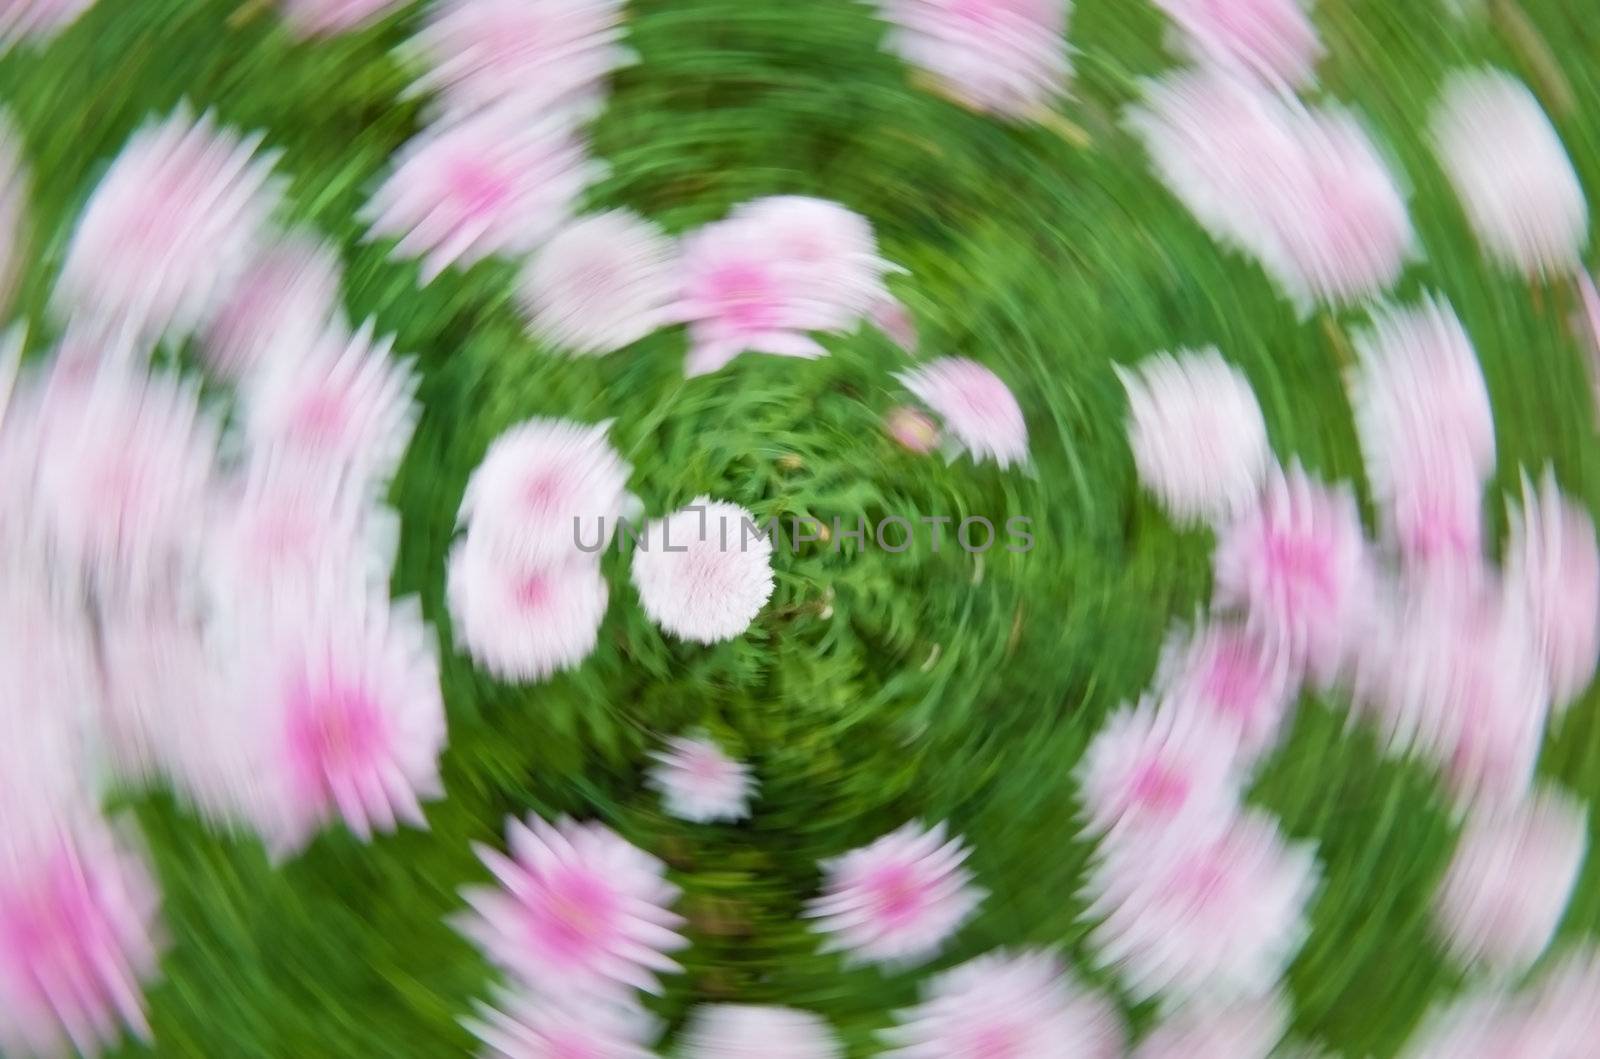 Flower vortex by akarelias